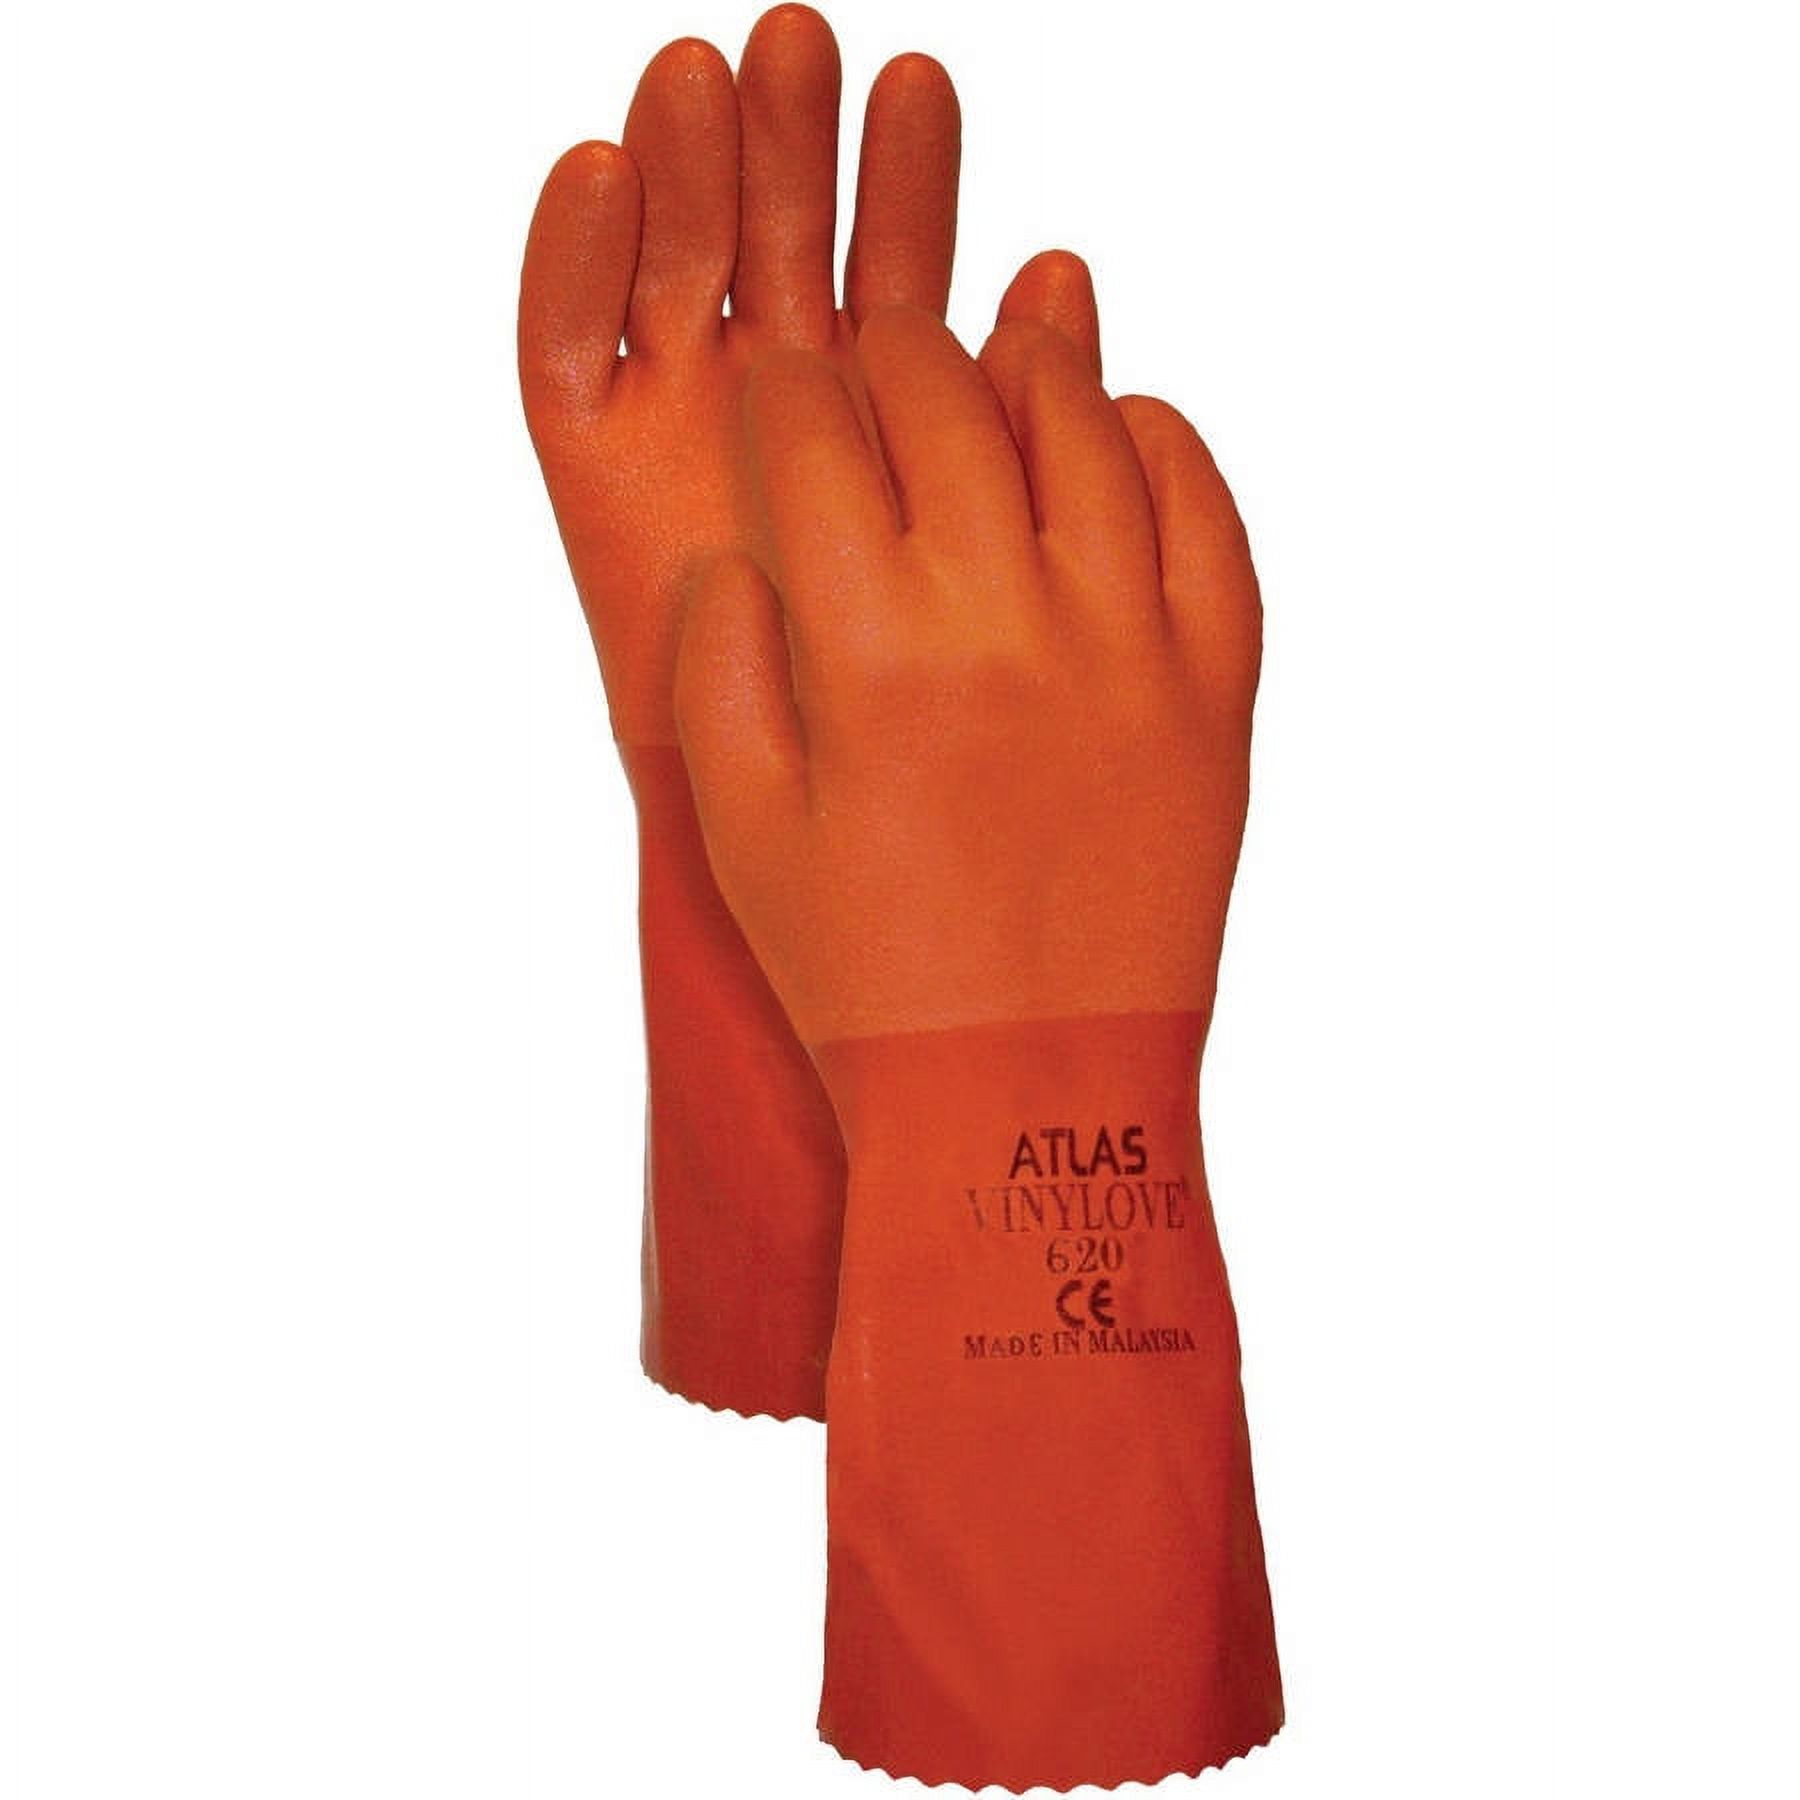 Atlas Vinylove PVC Gloves - image 1 of 6